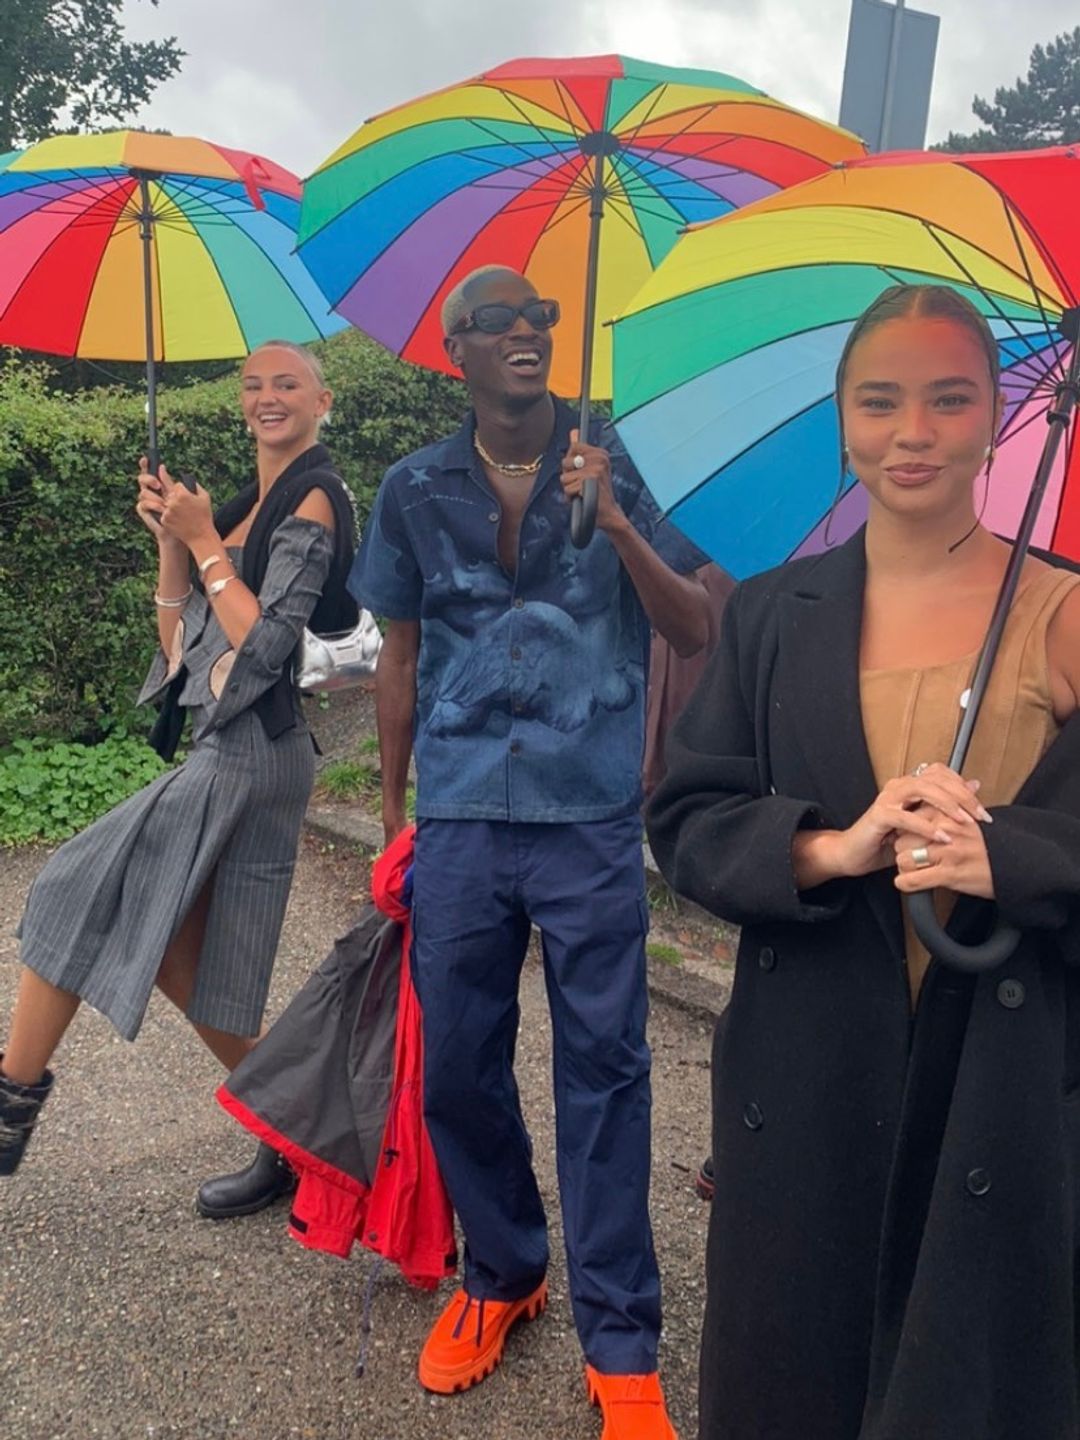 Mia Regan holding a colourful umbrella alongside two others 